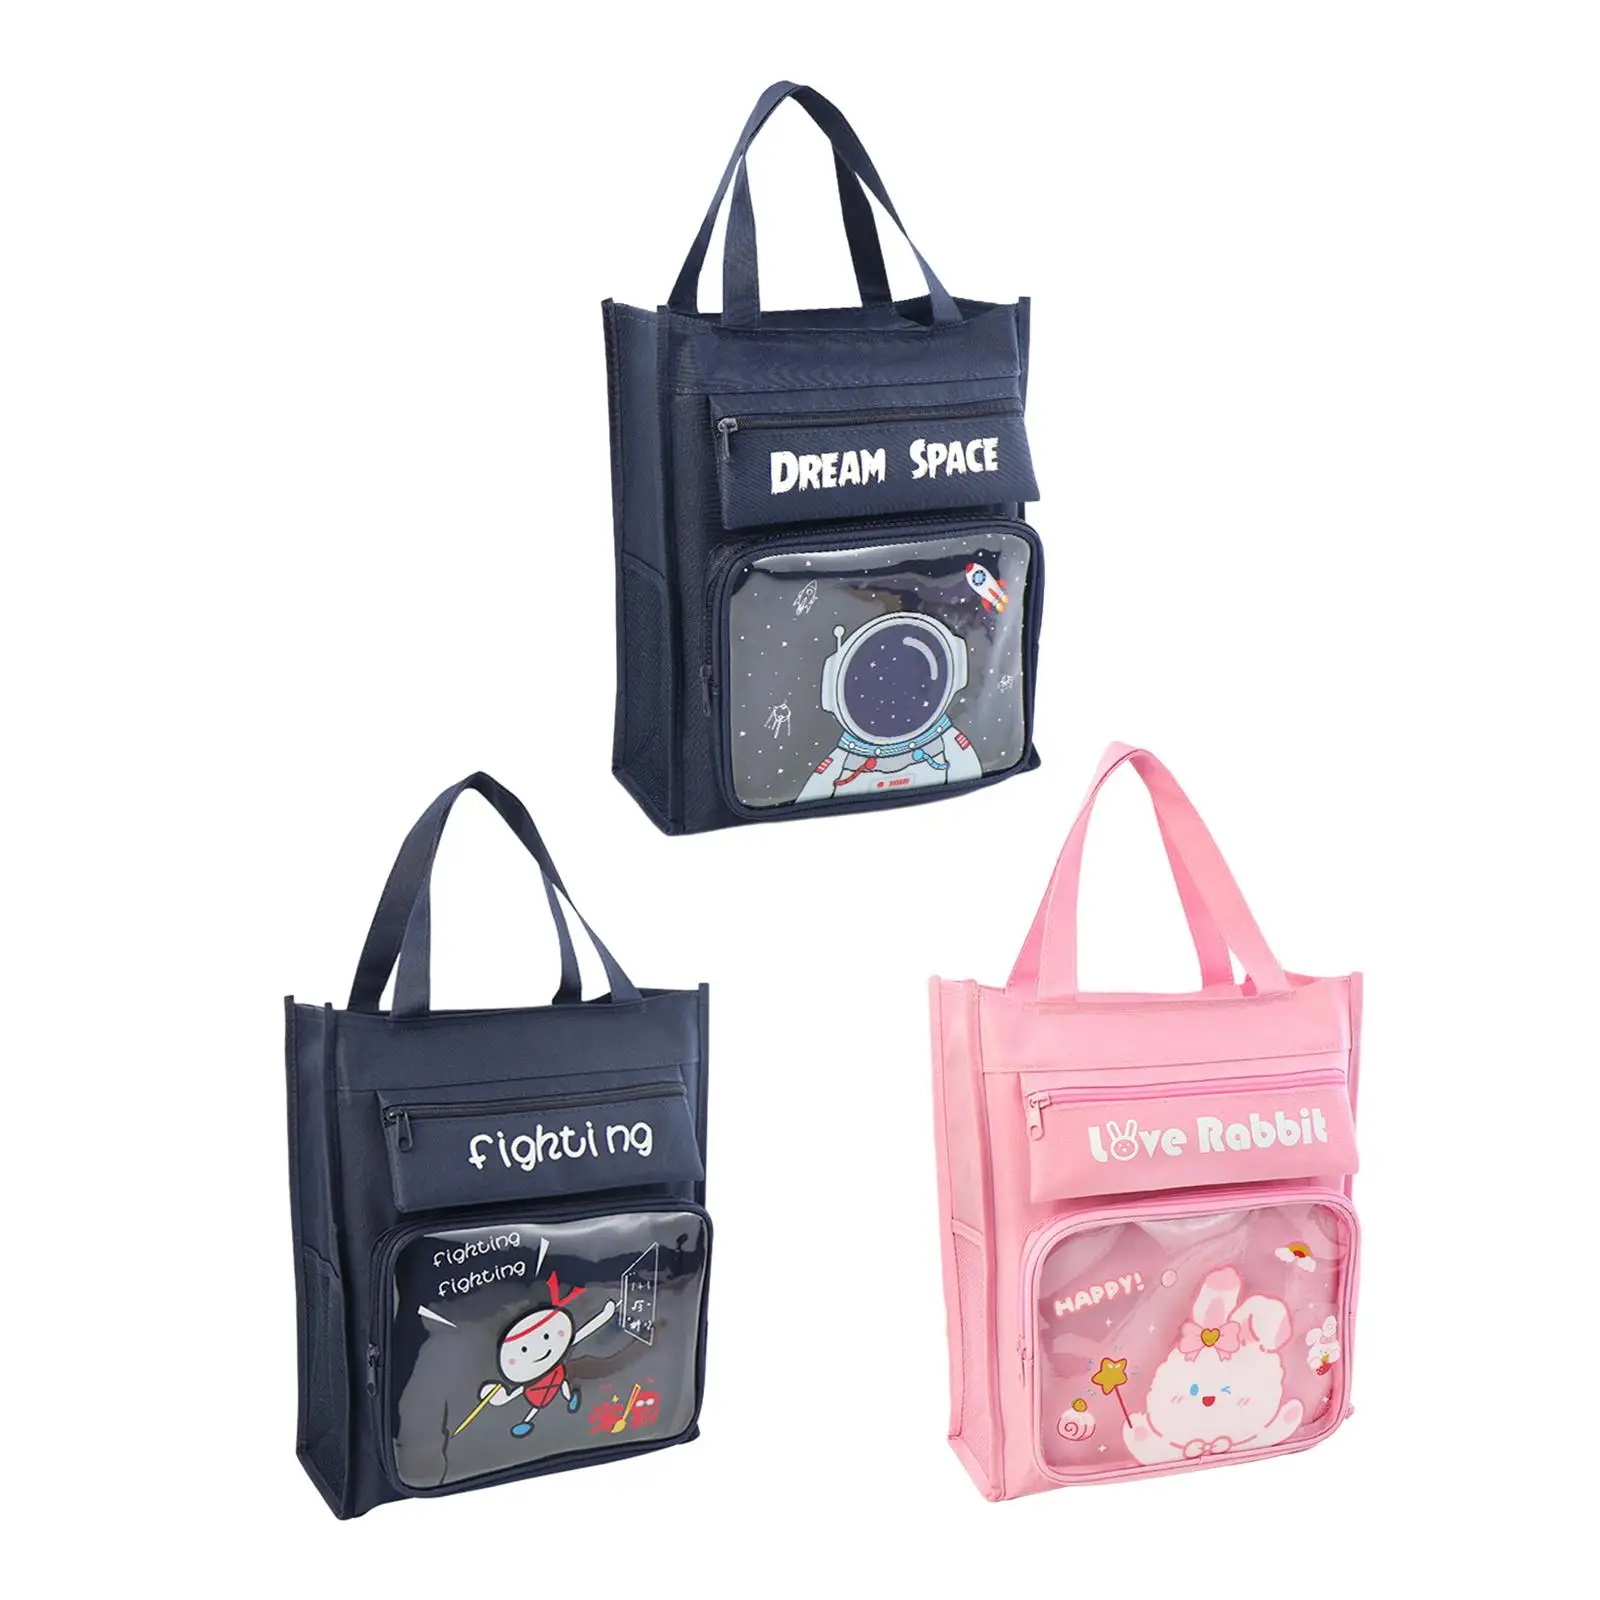 Kids Tote Bag Large Capacity Top Handle Shopping Bag Cute Shoulder Bag Handbag for Students Preschool Travel Classroom Home